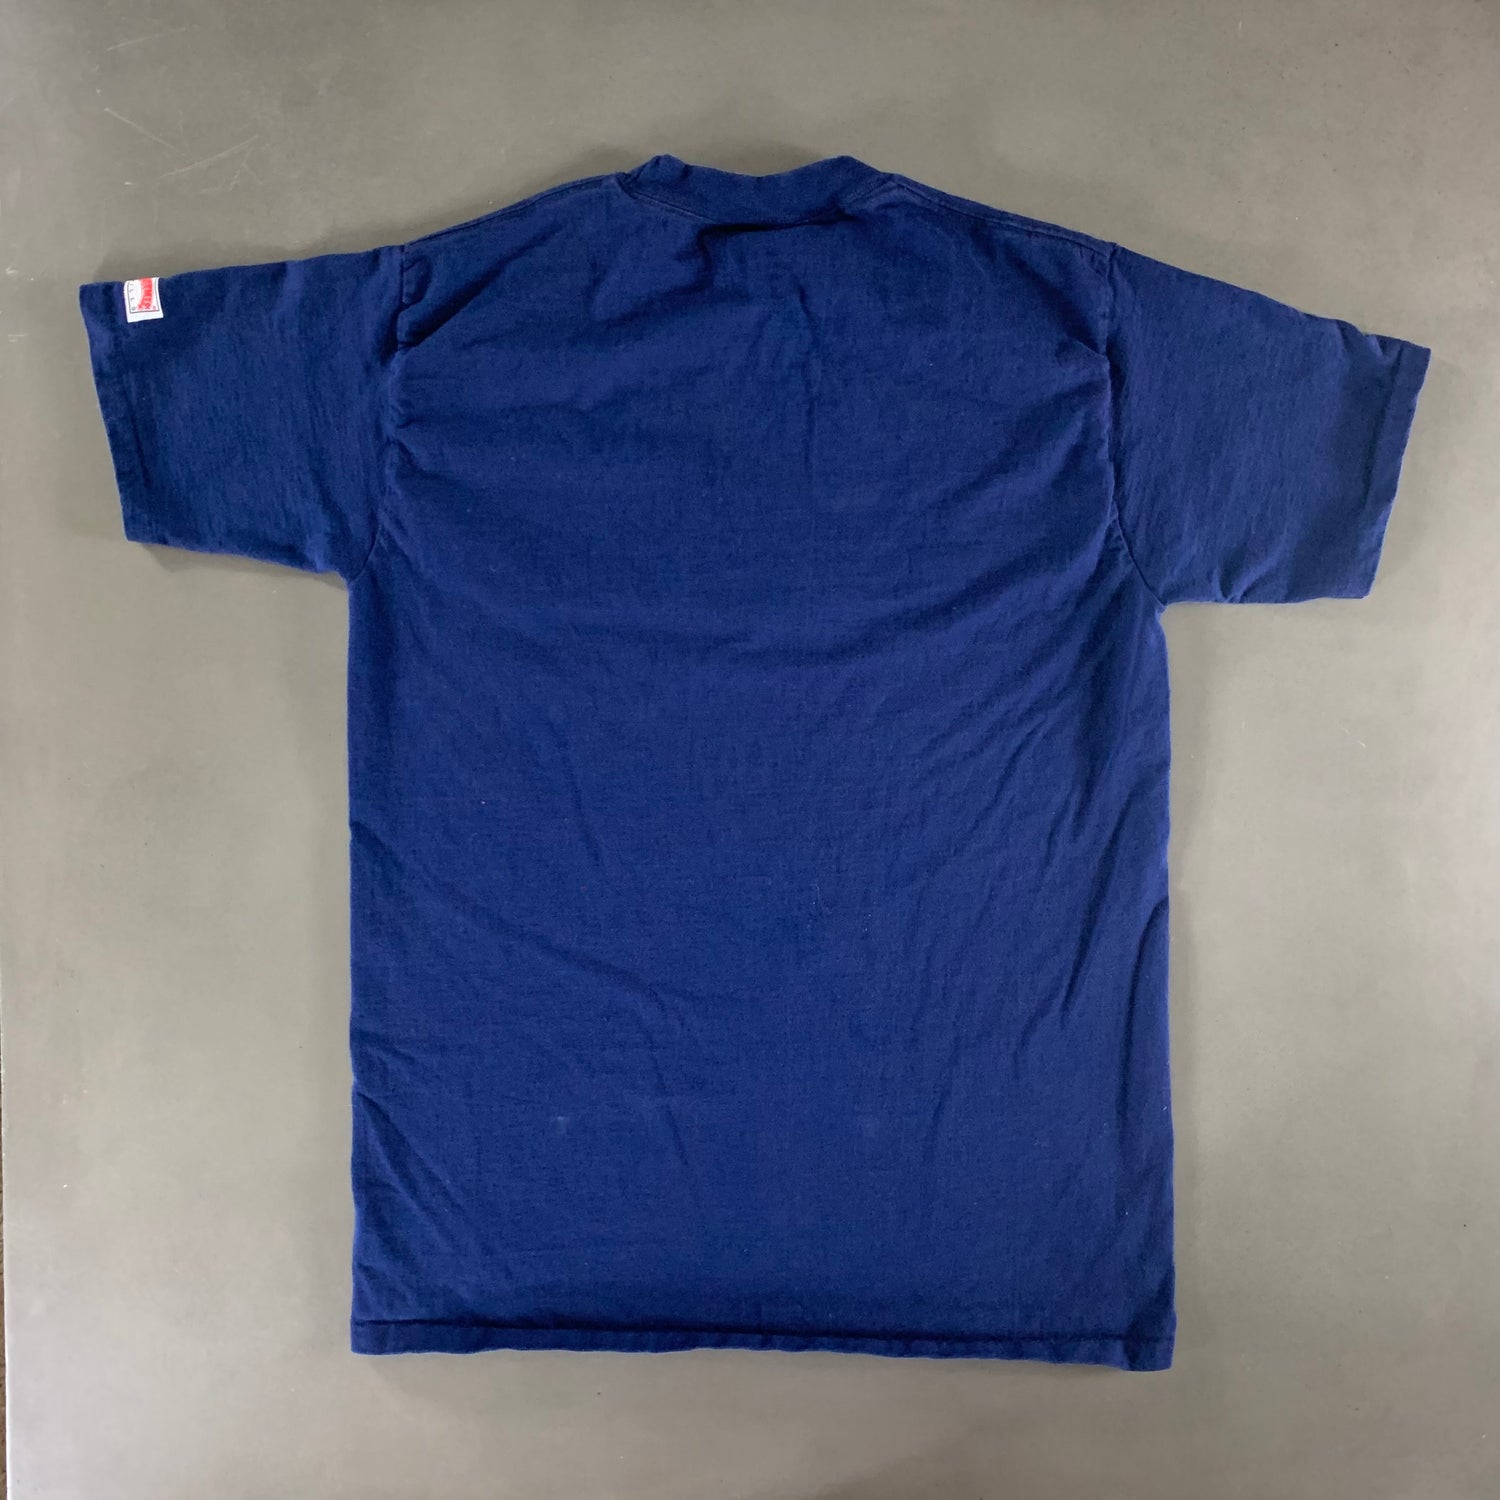 Vintage 1990s New York Yankees T-shirt size XL